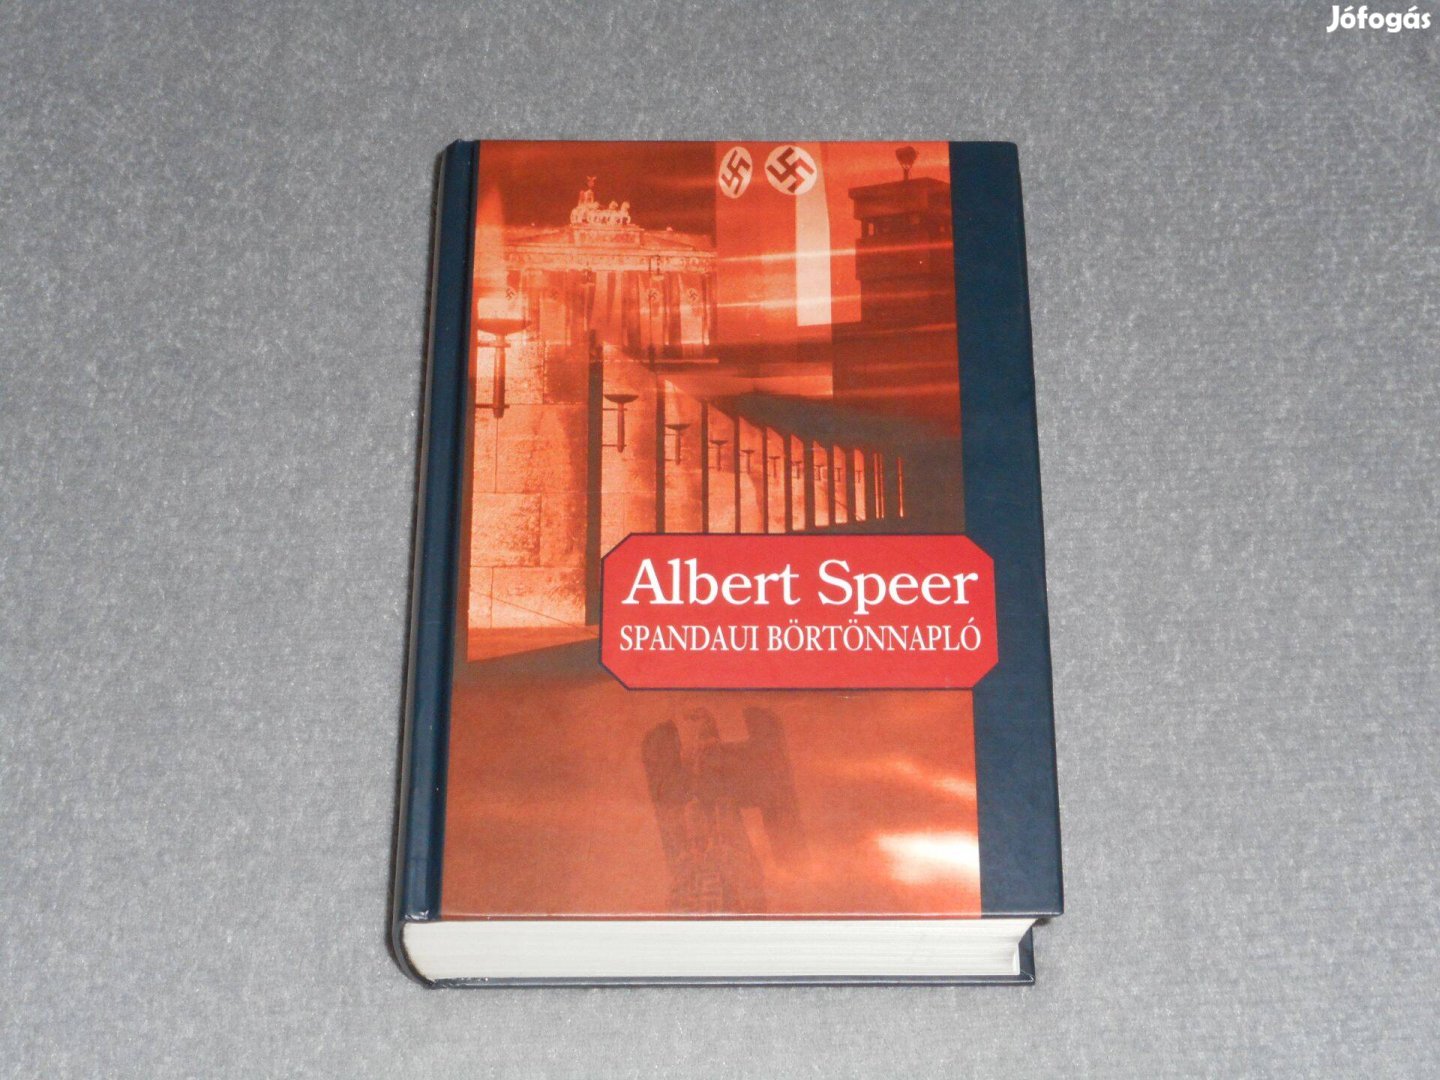 Albert Speer - Spandaui börtönnapló (Nagyon ritka!)